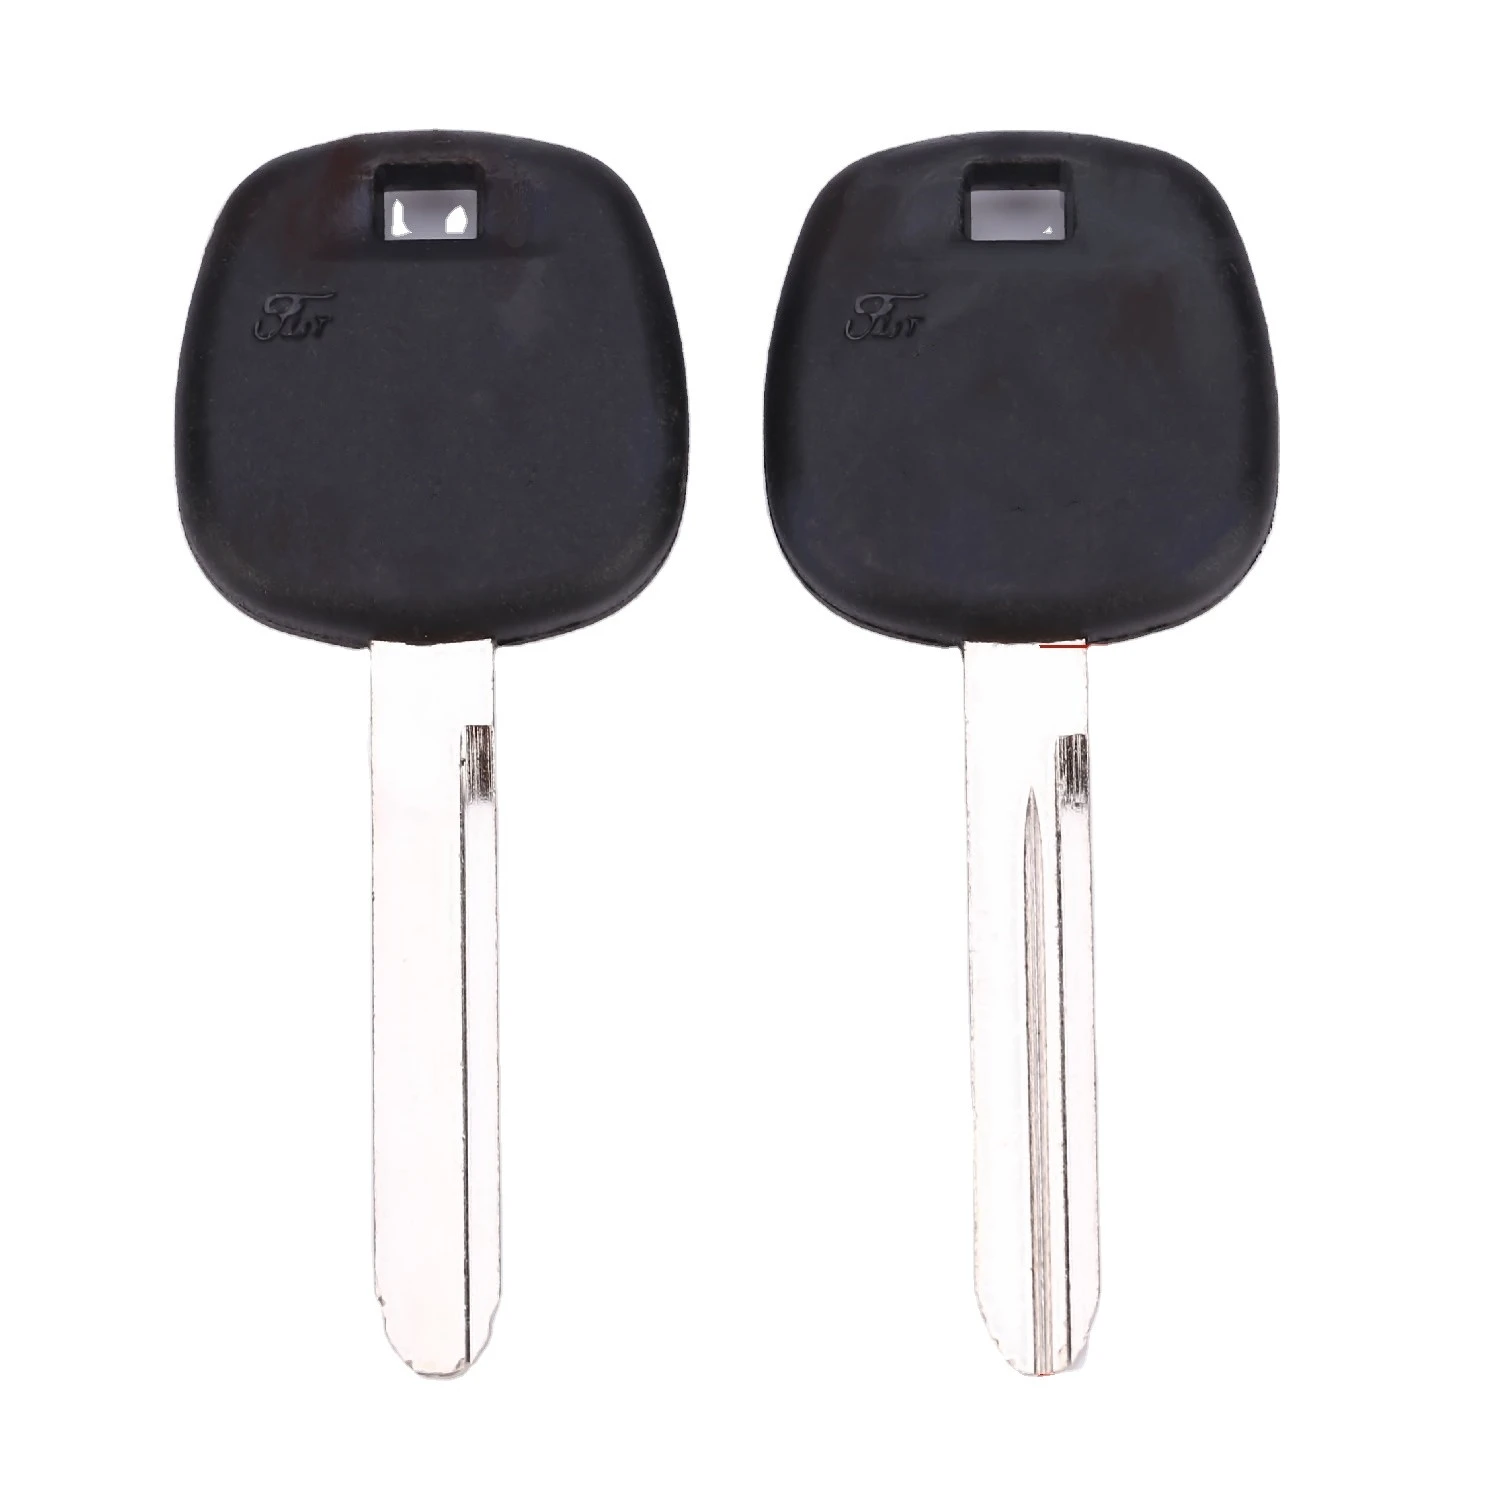 Ordinary car key Car key with black handle Car key